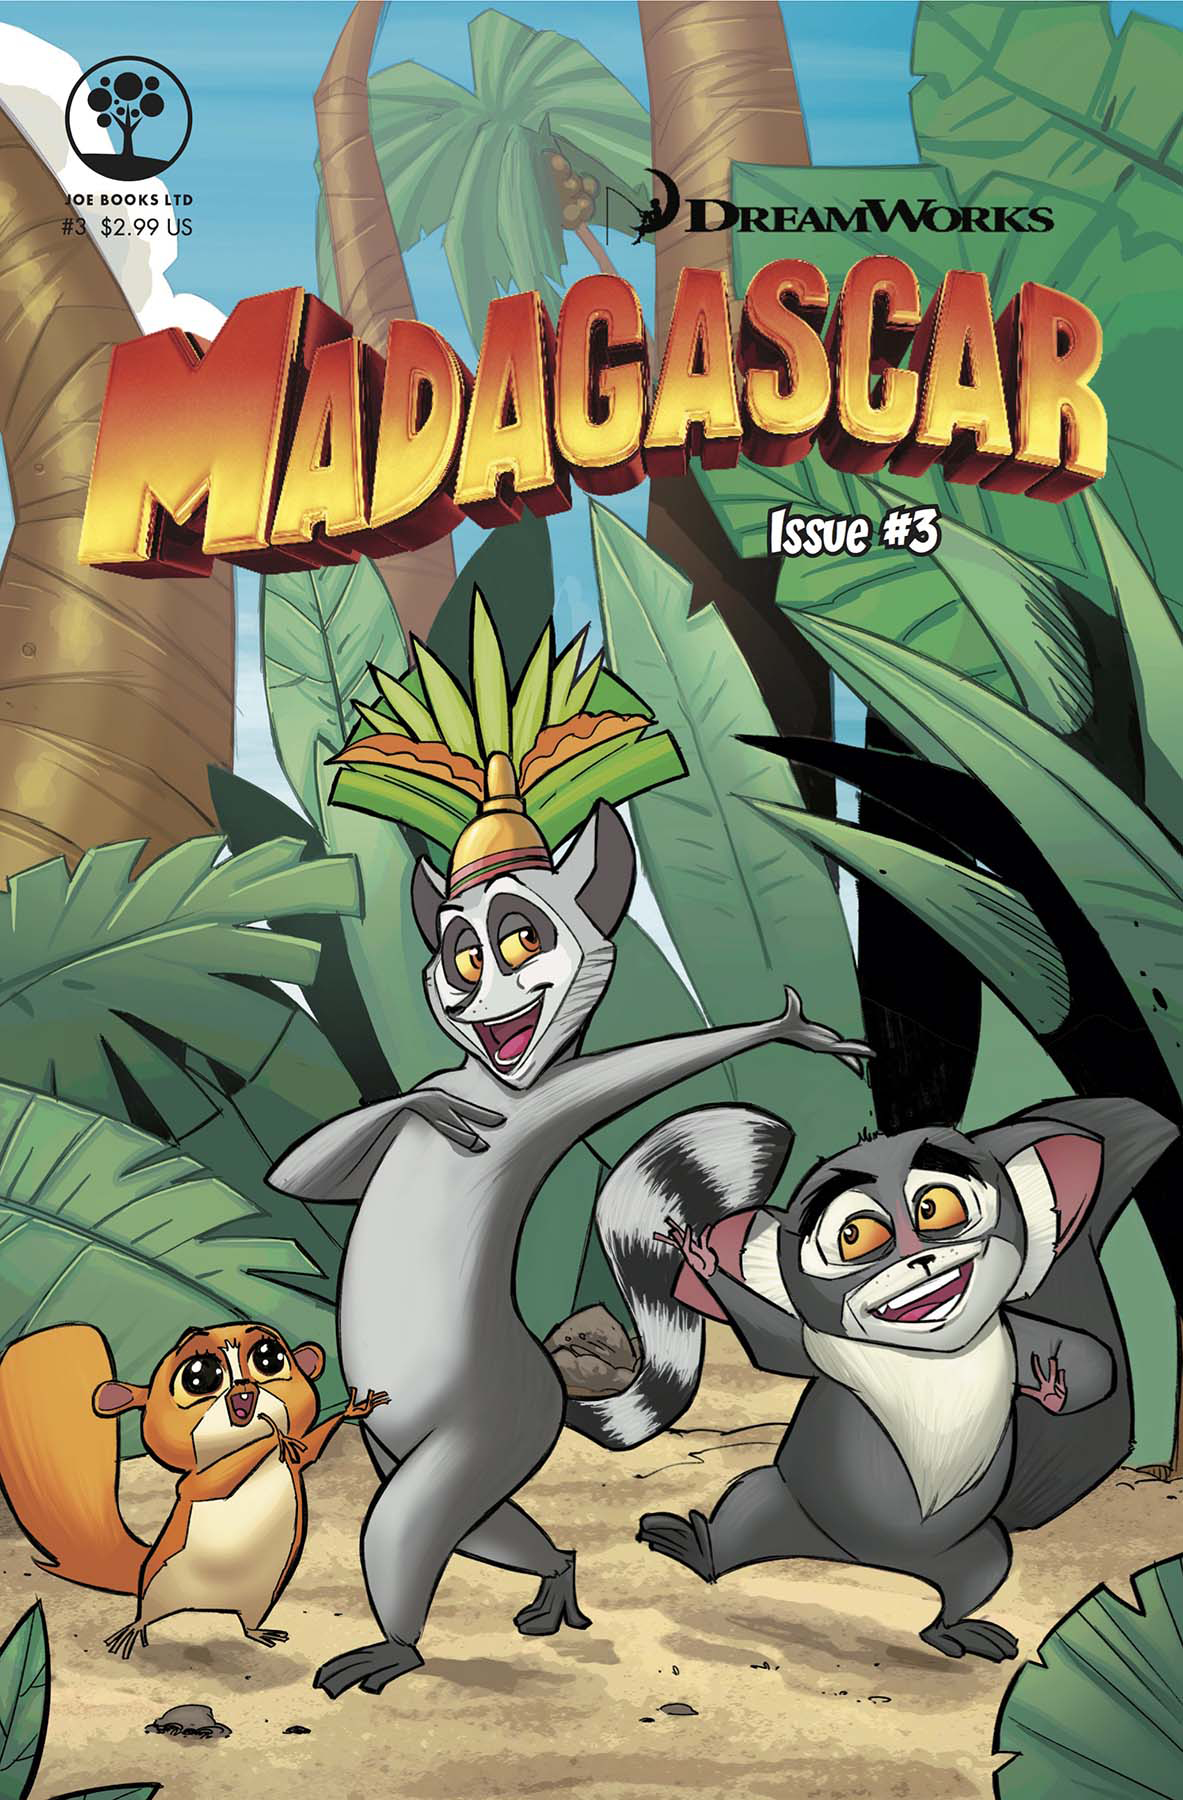 DREAMWORKS MADAGASCAR #3